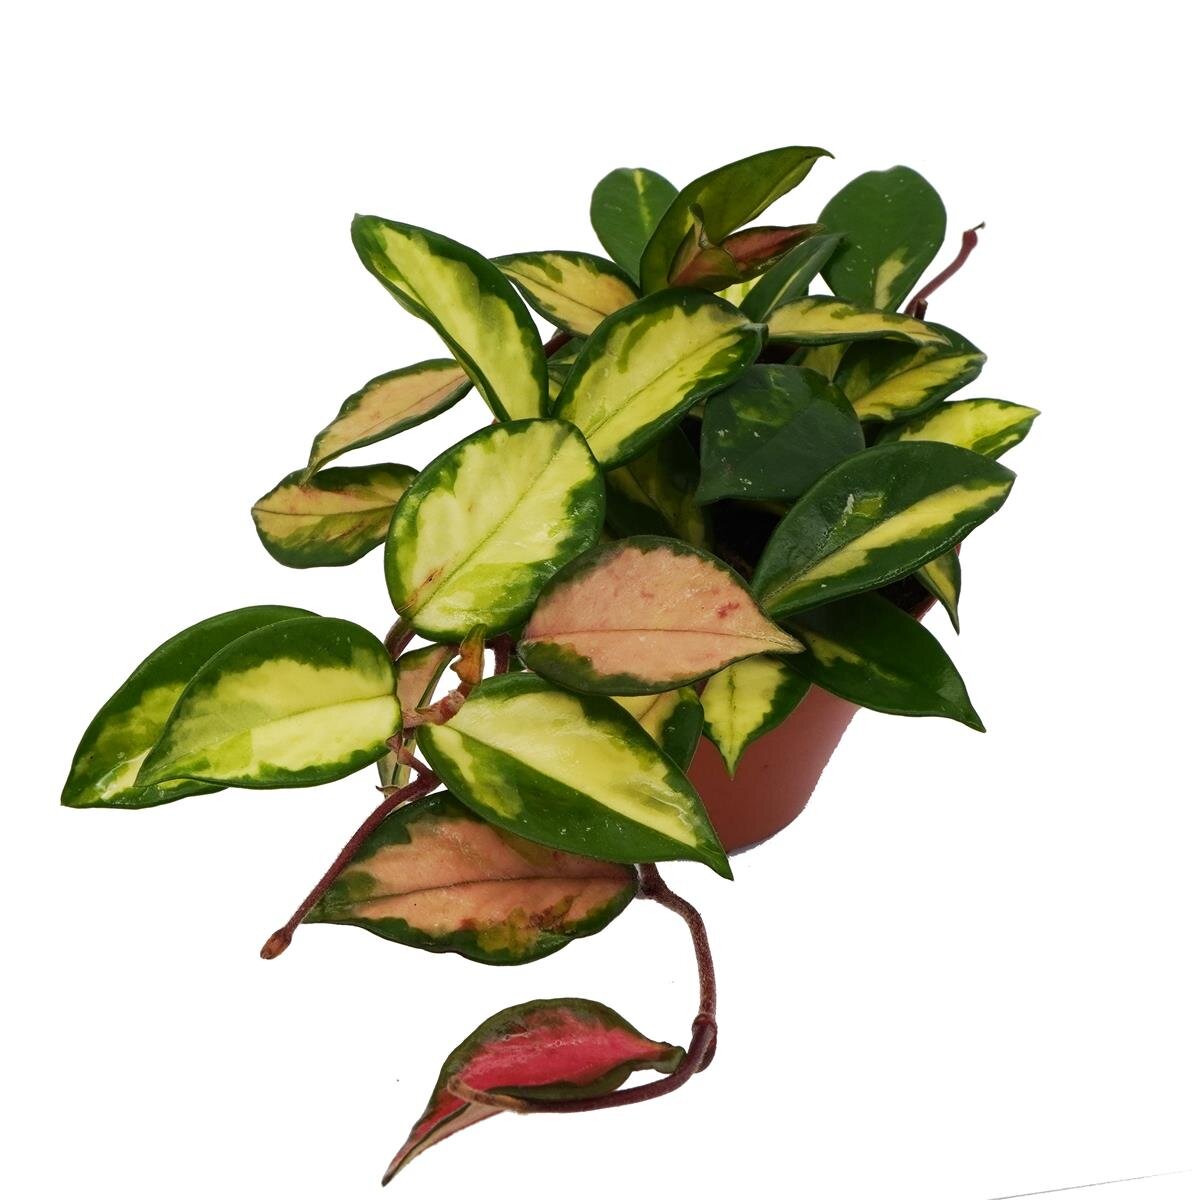 Porzellanblume, (Hoya carnosa), Sorte: Tricolor, im 12cm Topf